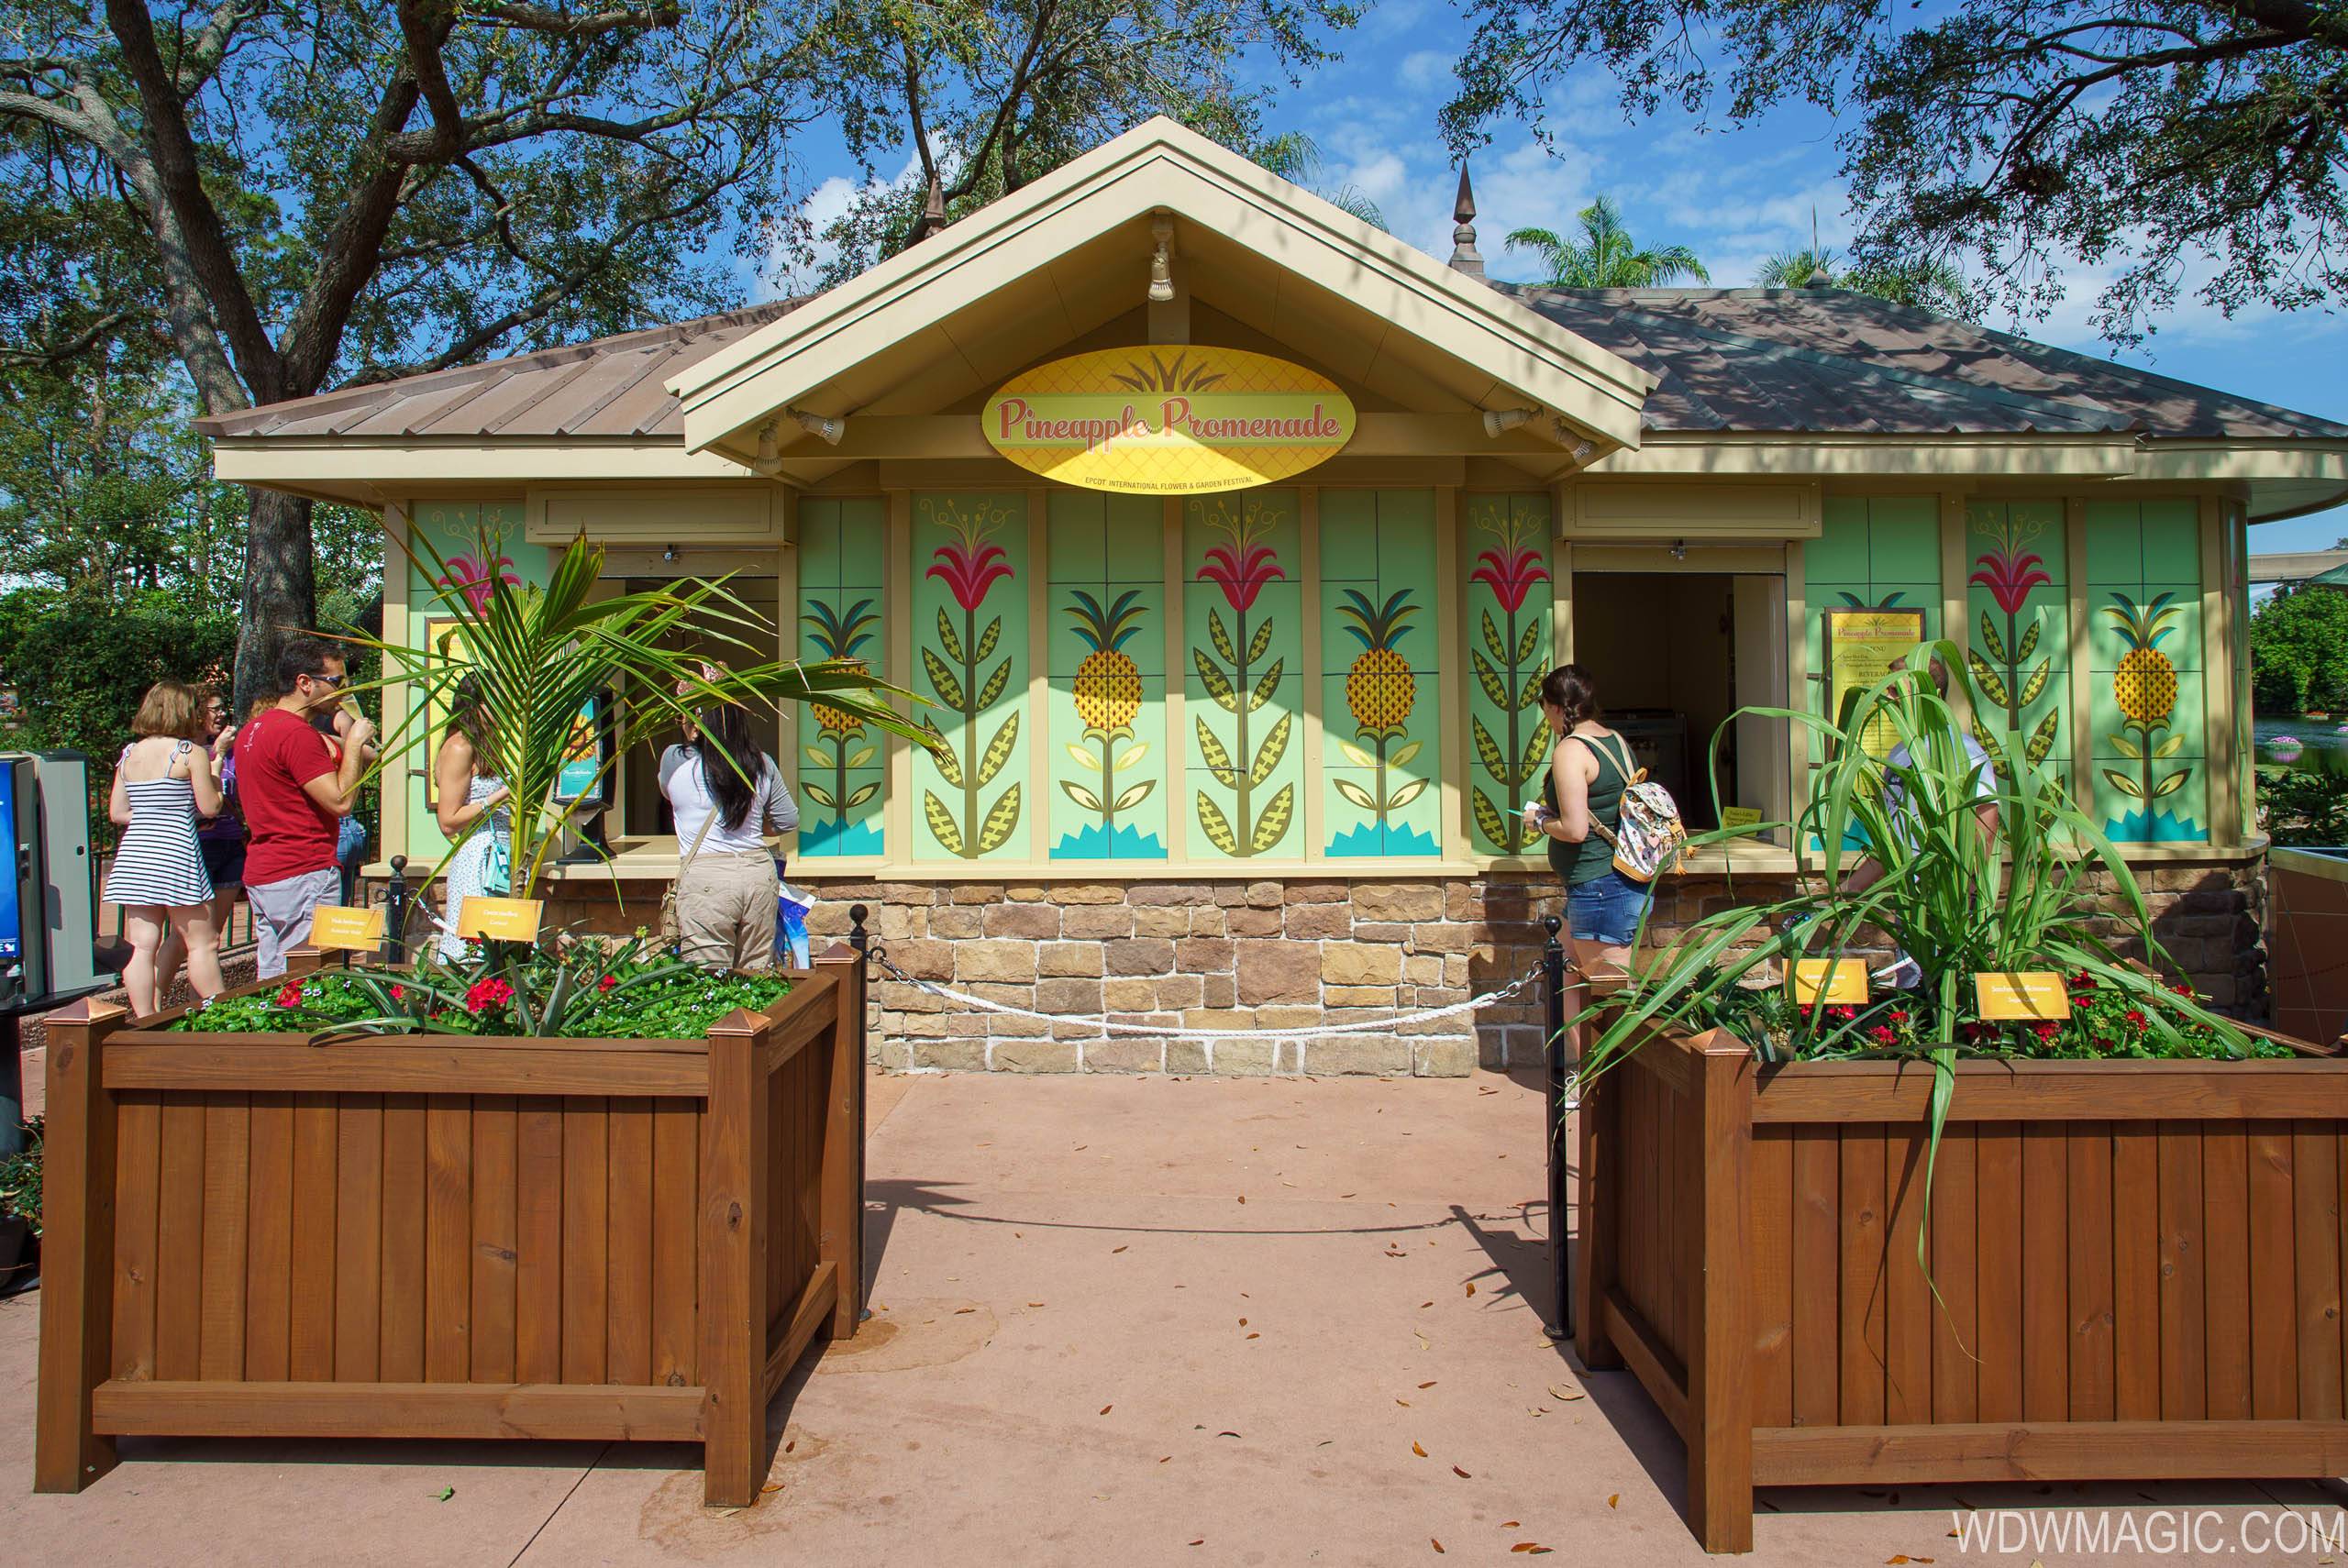 2018 Epcot Flower and Garden Festival Outdoor Kitchen kiosks - Pineapple Promenade